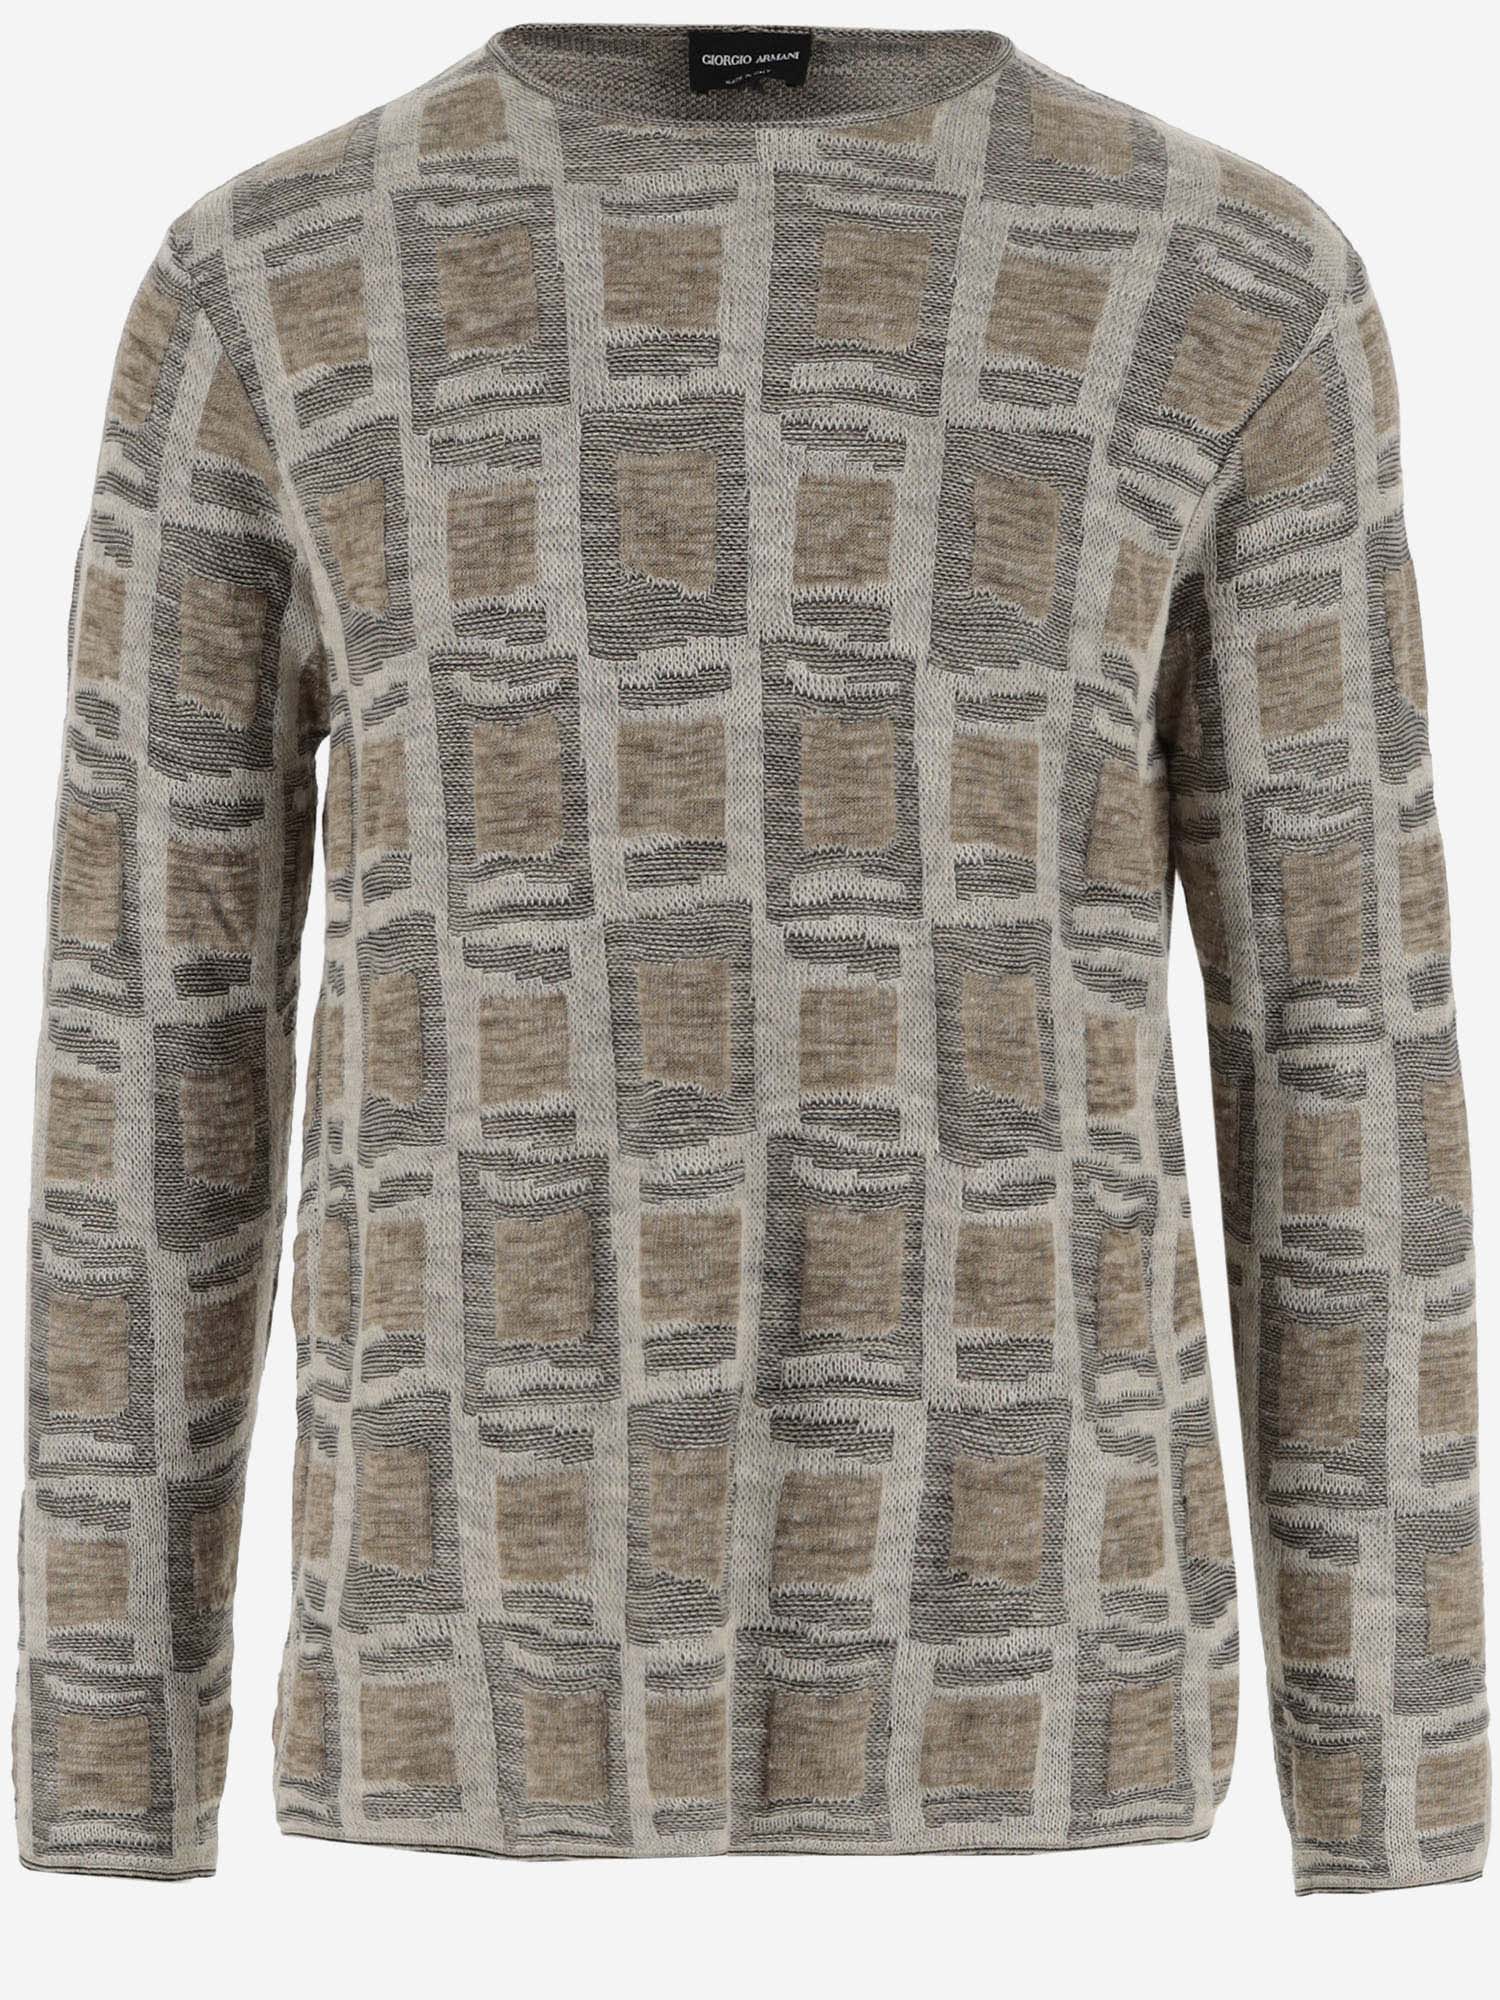 Giorgio Armani Wool And Linen Blend Pullover